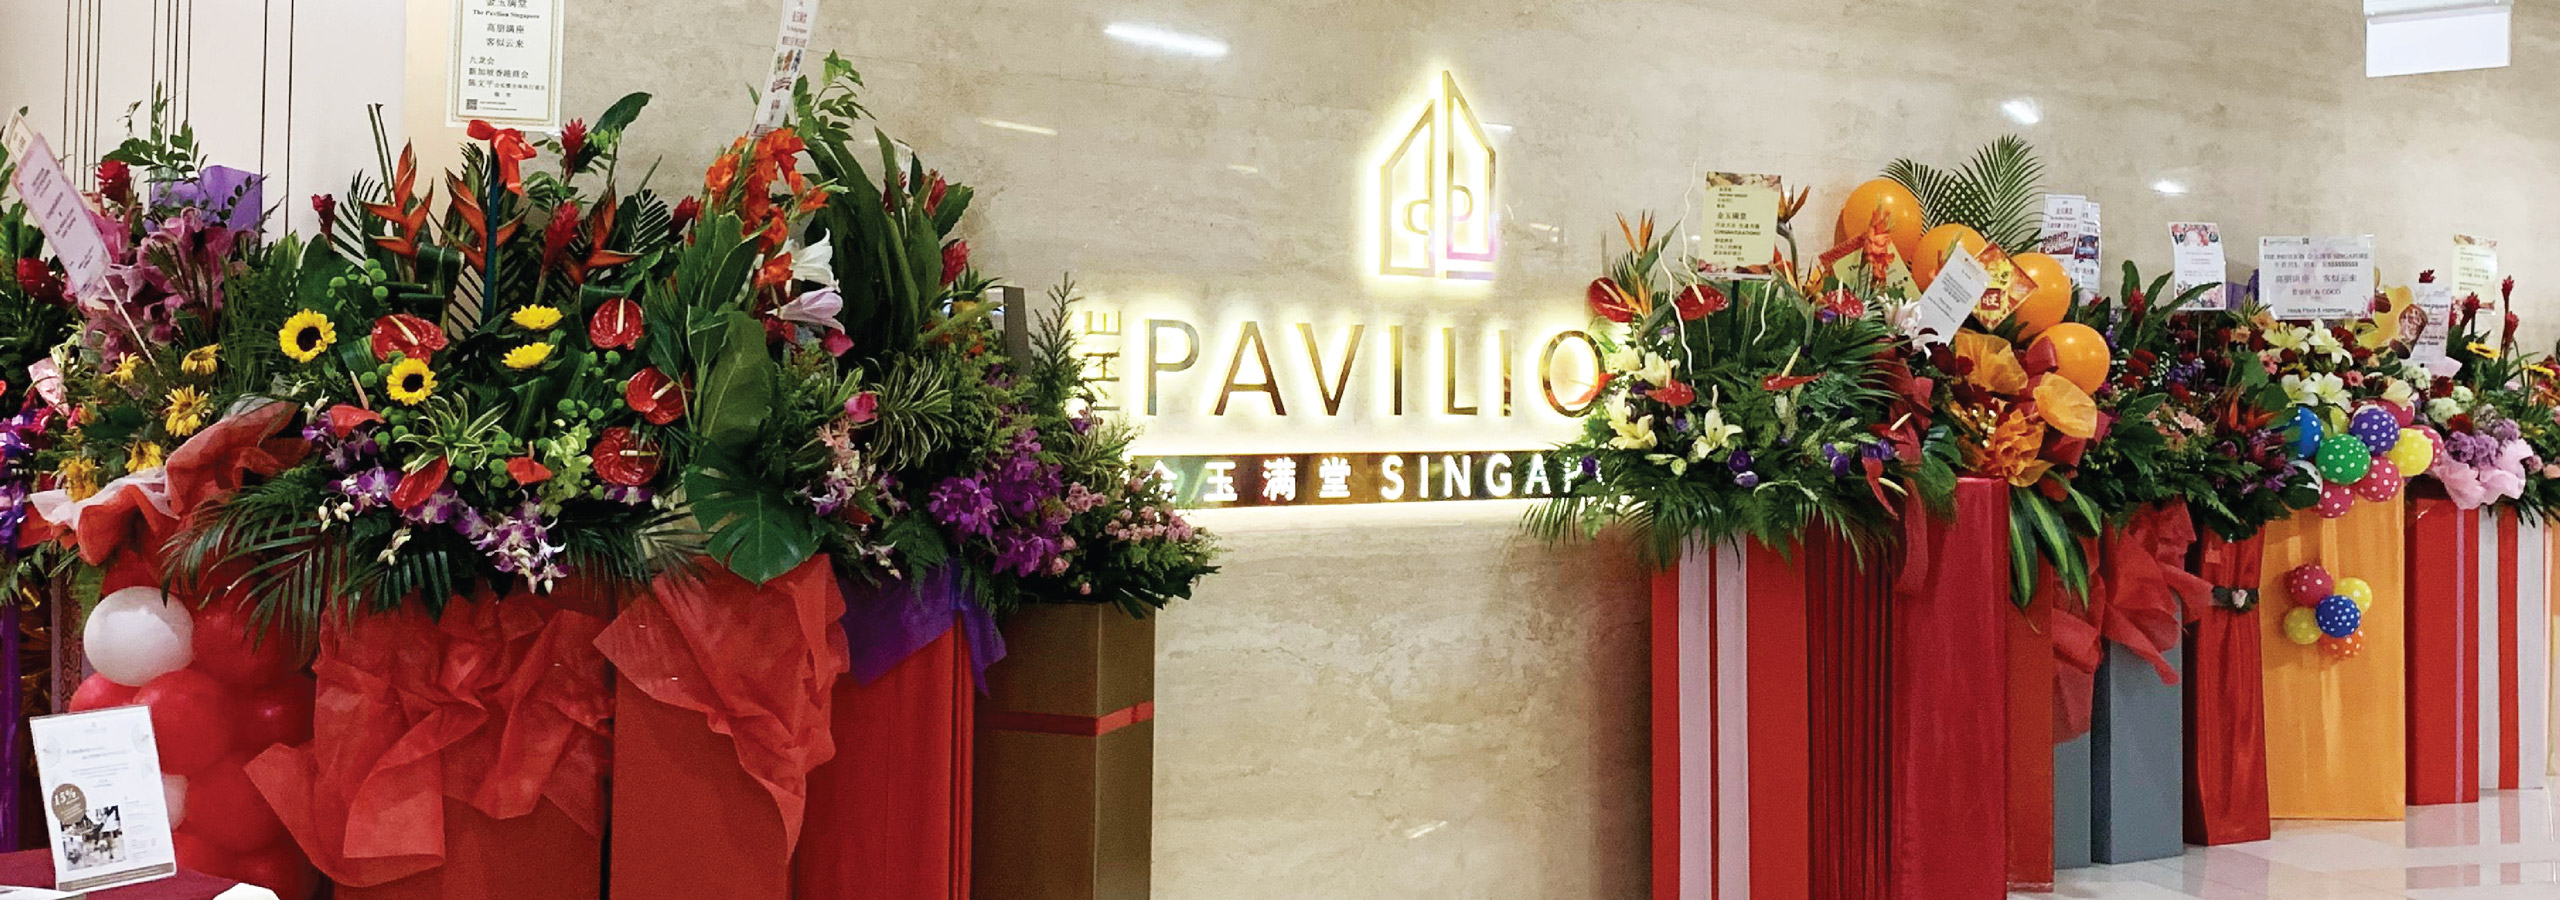 Pavilion Singapore